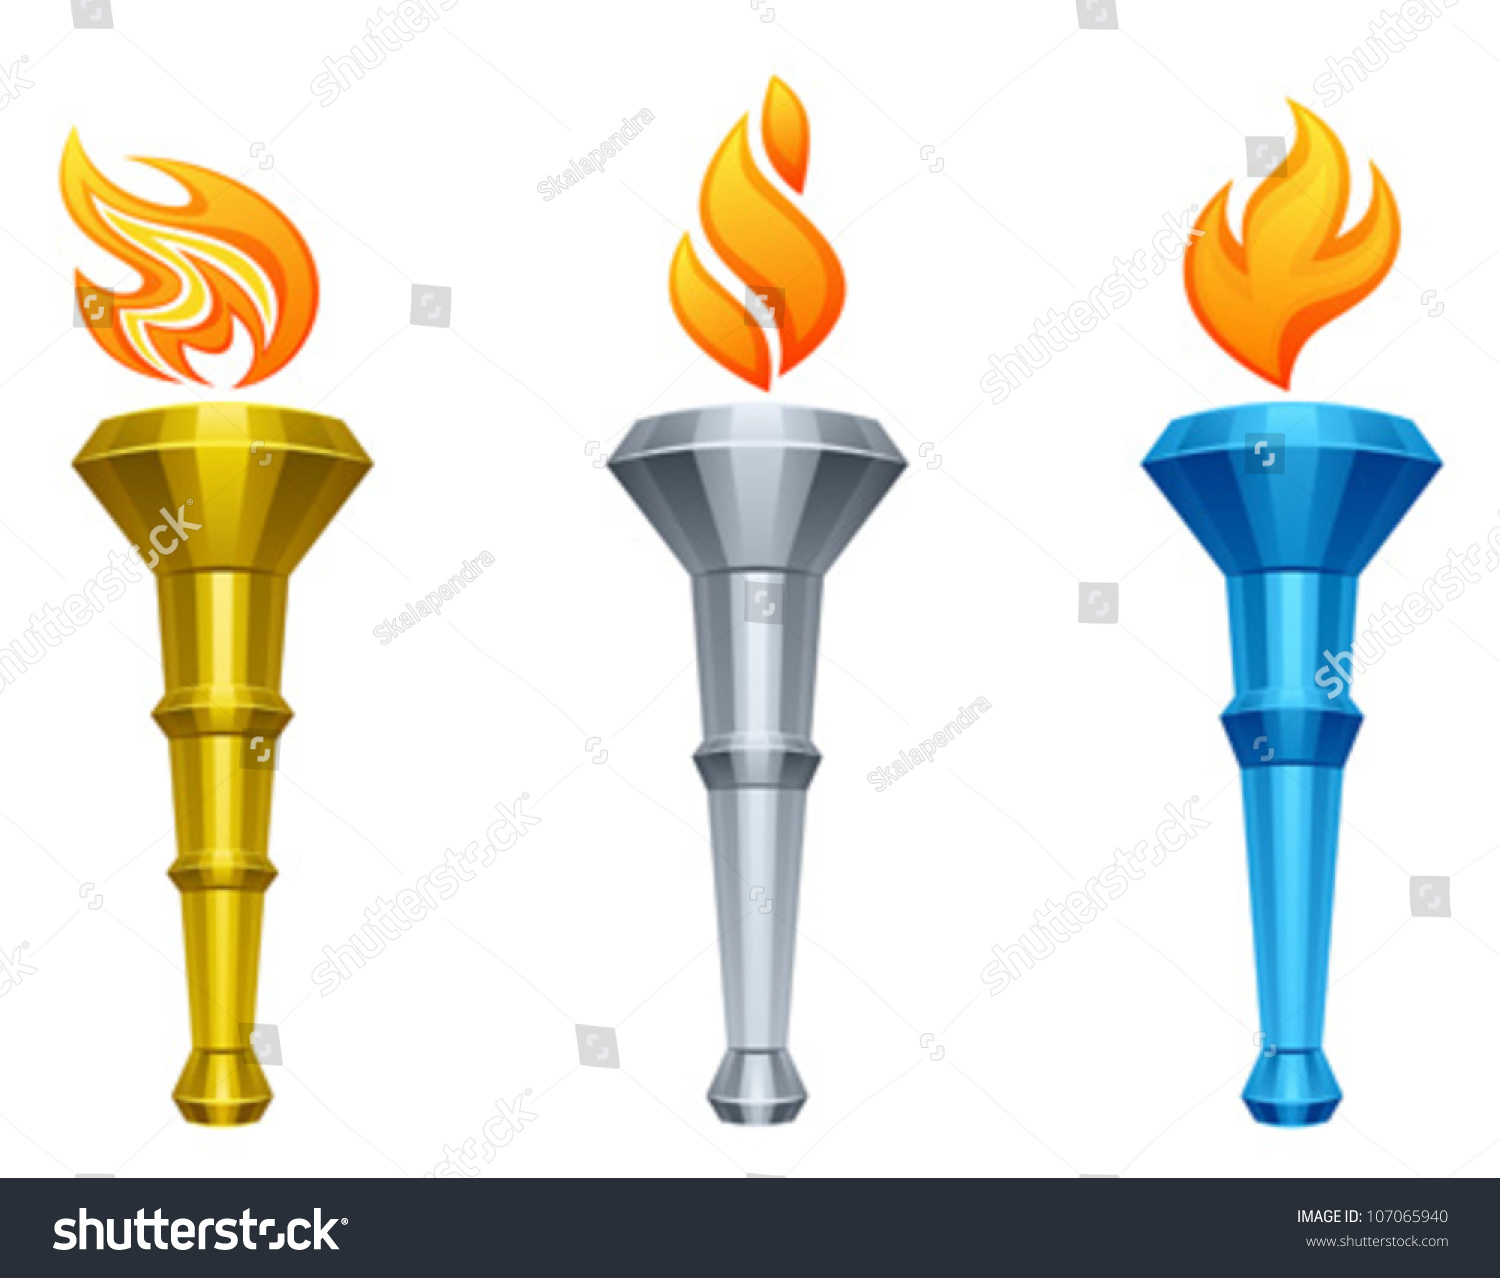 Олимпийский факел для детей